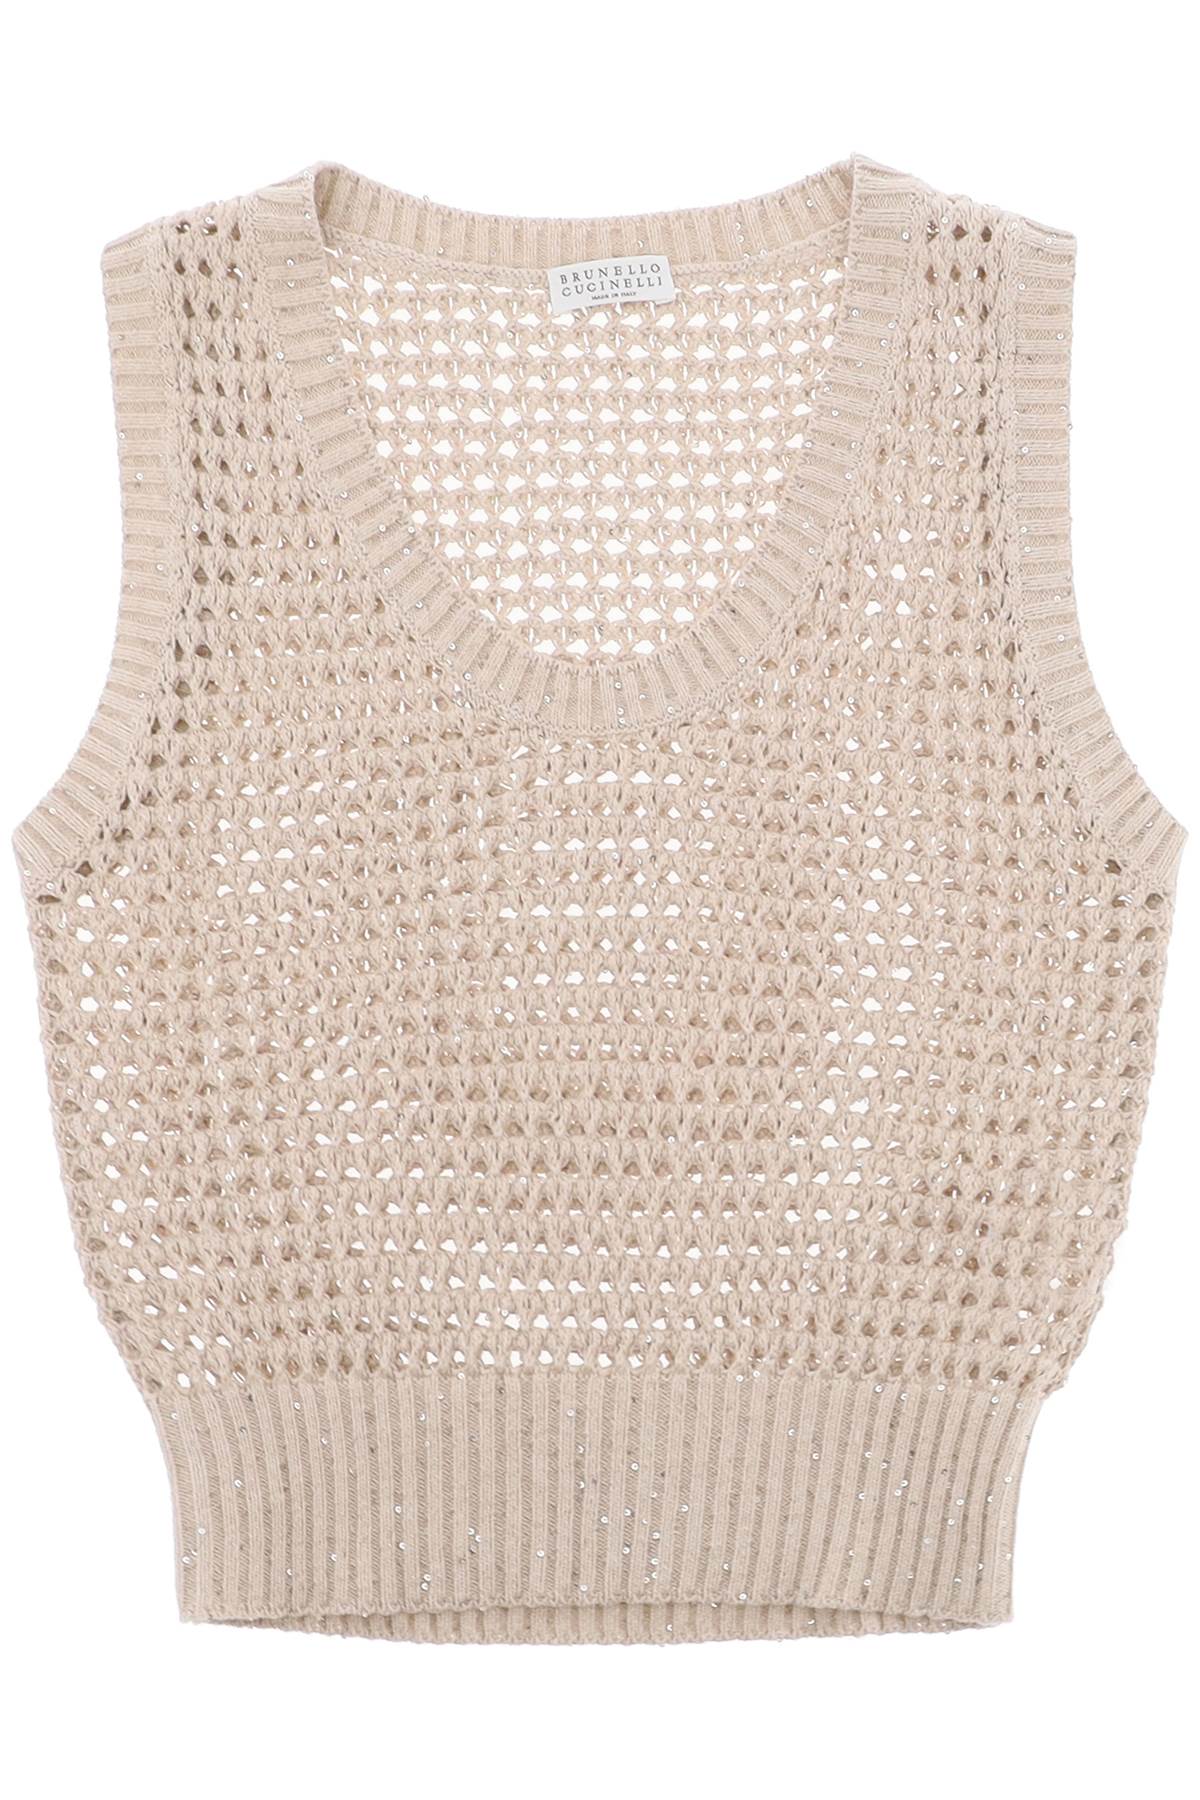 Brunello Cucinelli Knit Top With Sparkling Details-women > clothing > tops-Brunello Cucinelli-Urbanheer